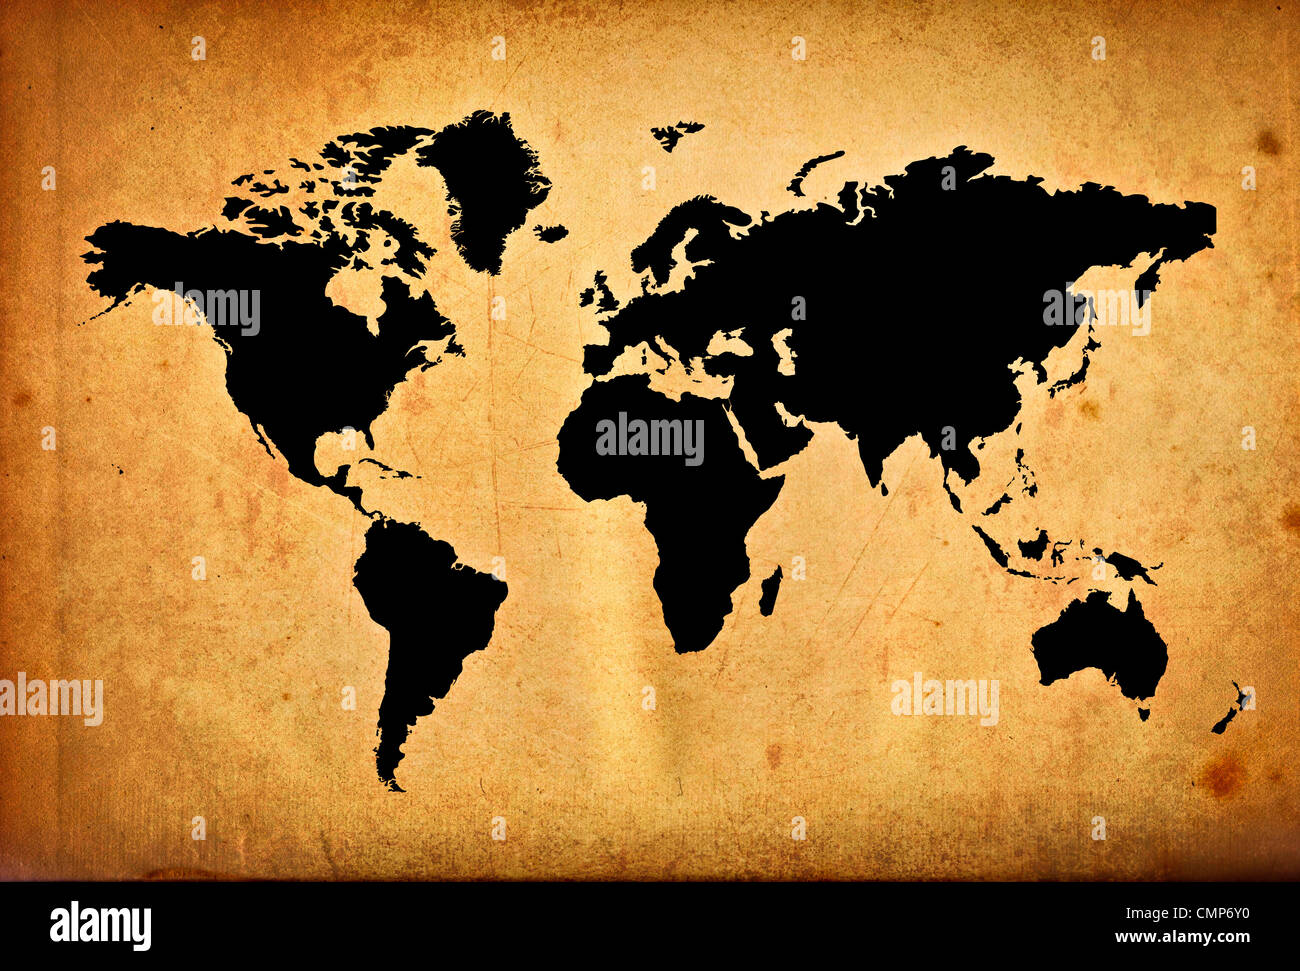 Grunge world map Banque D'Images